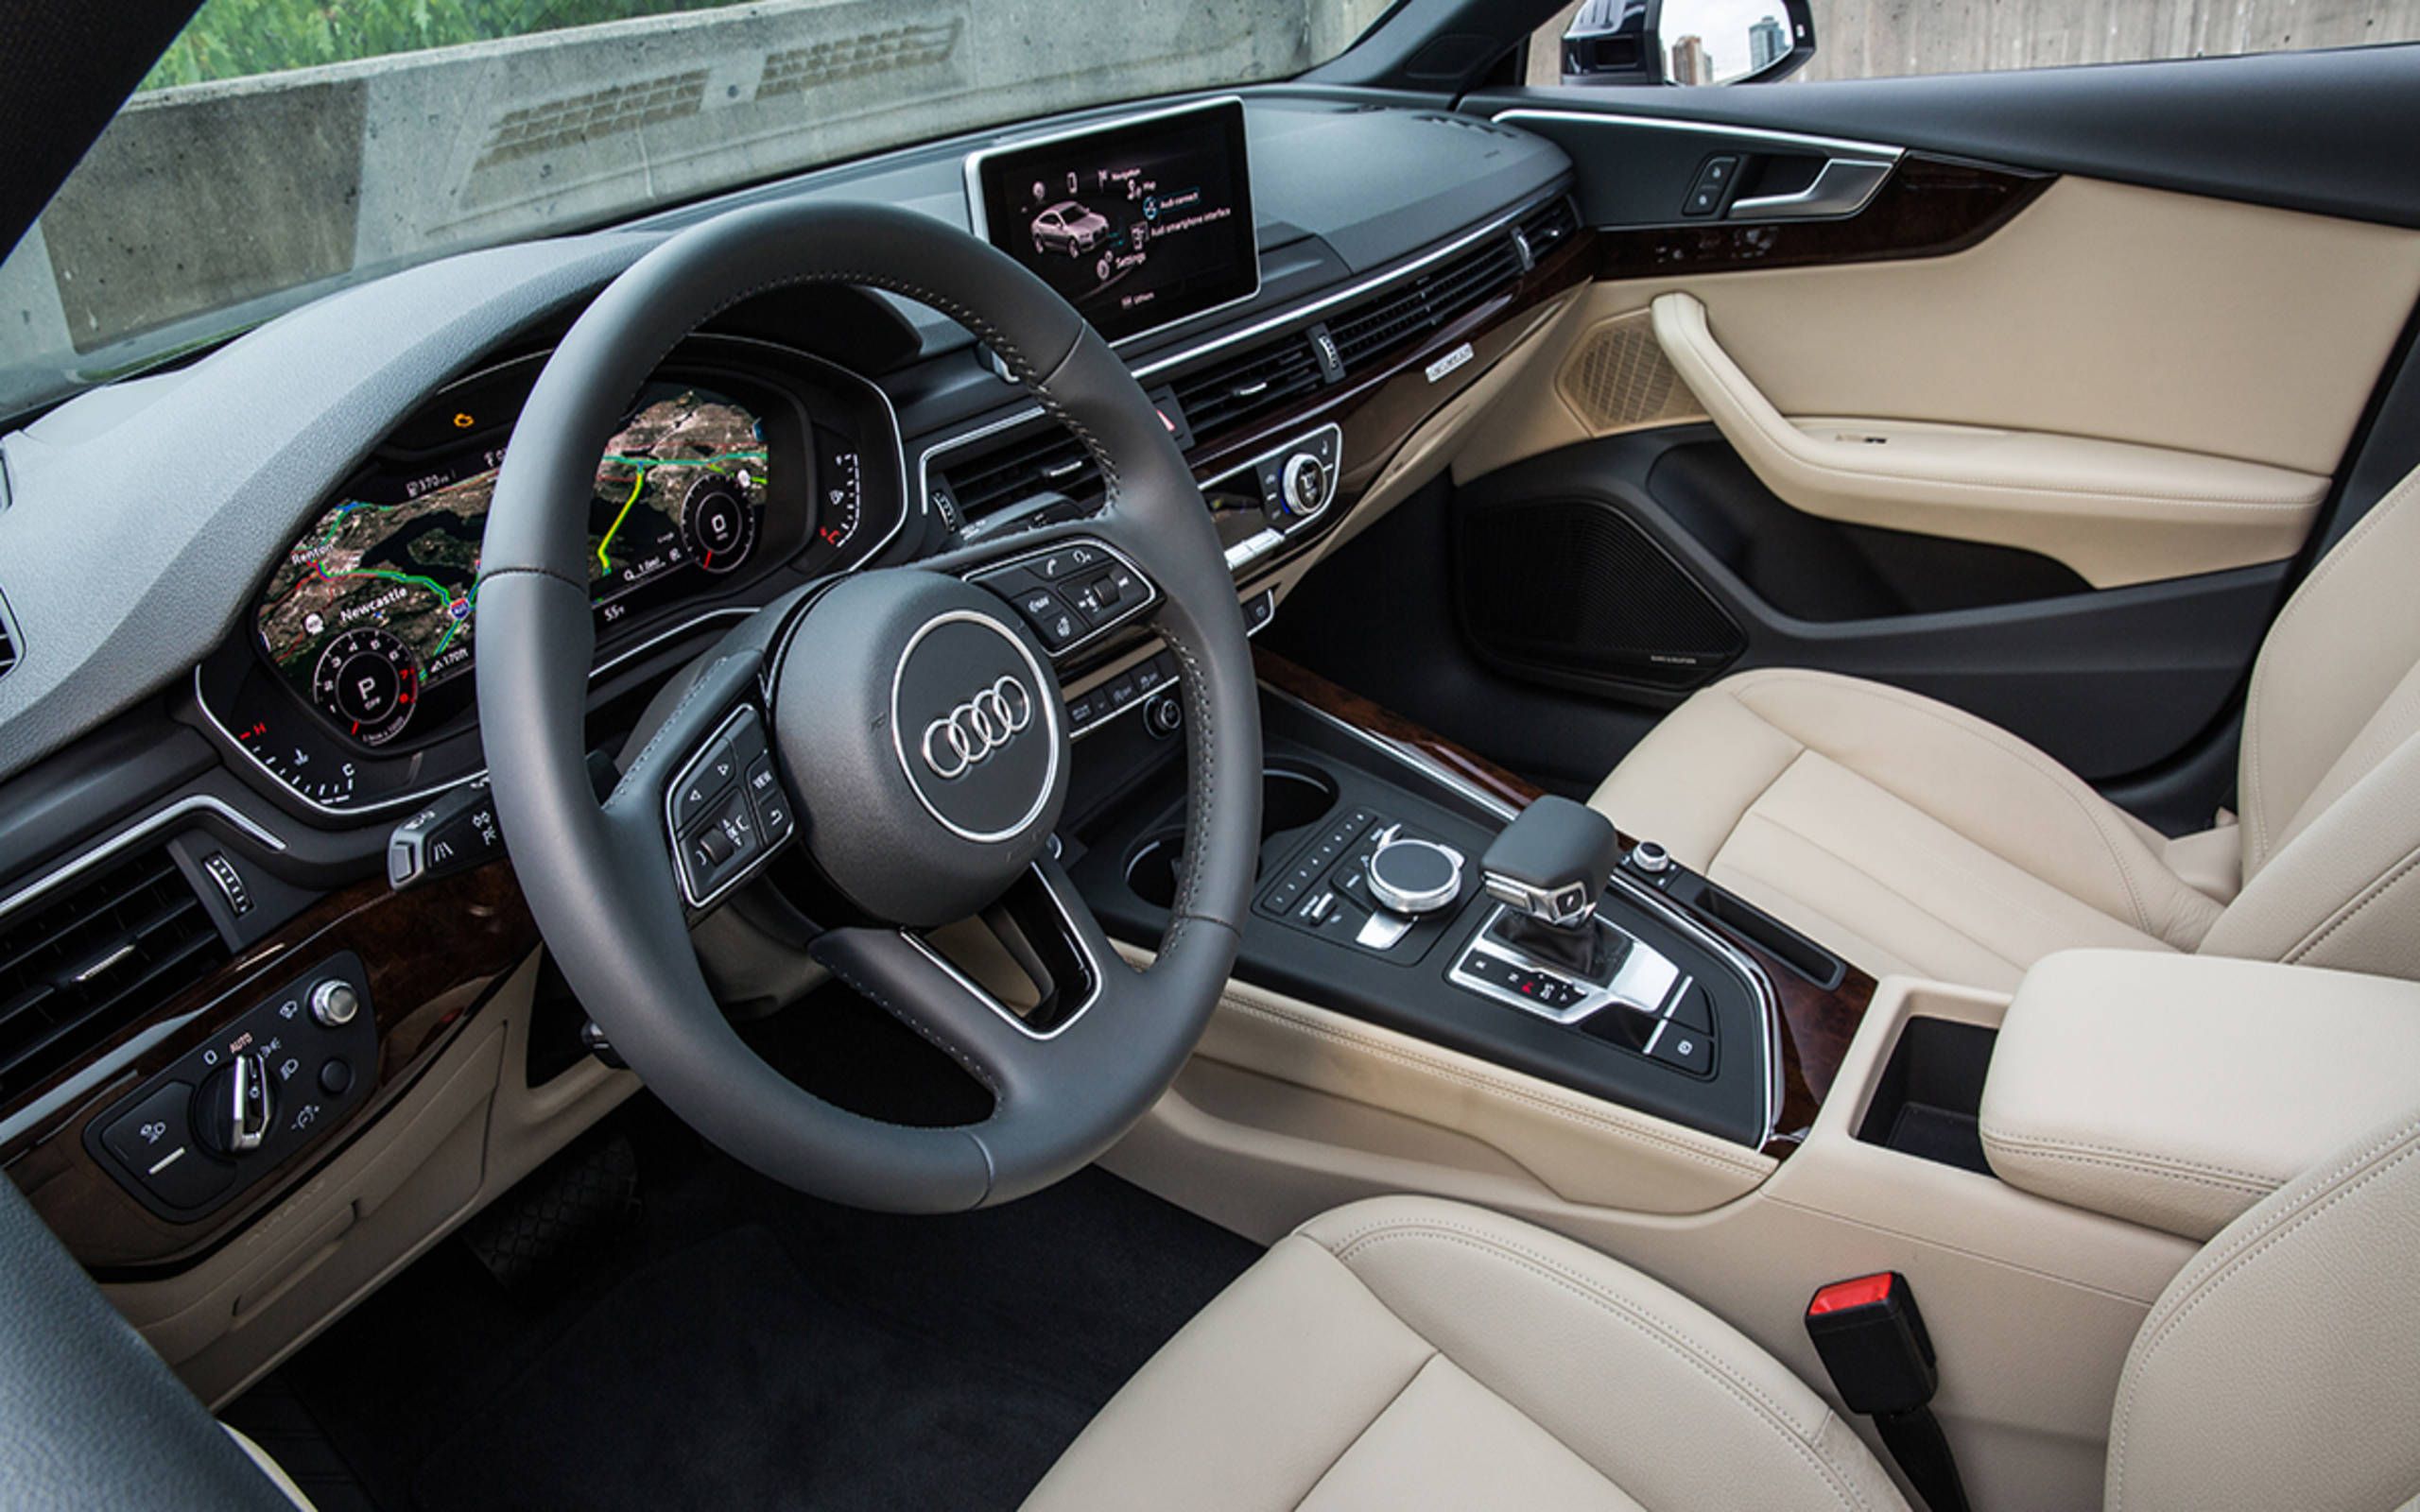 uitslag Uil kip Gallery 2018 Audi A5 Sportback interior